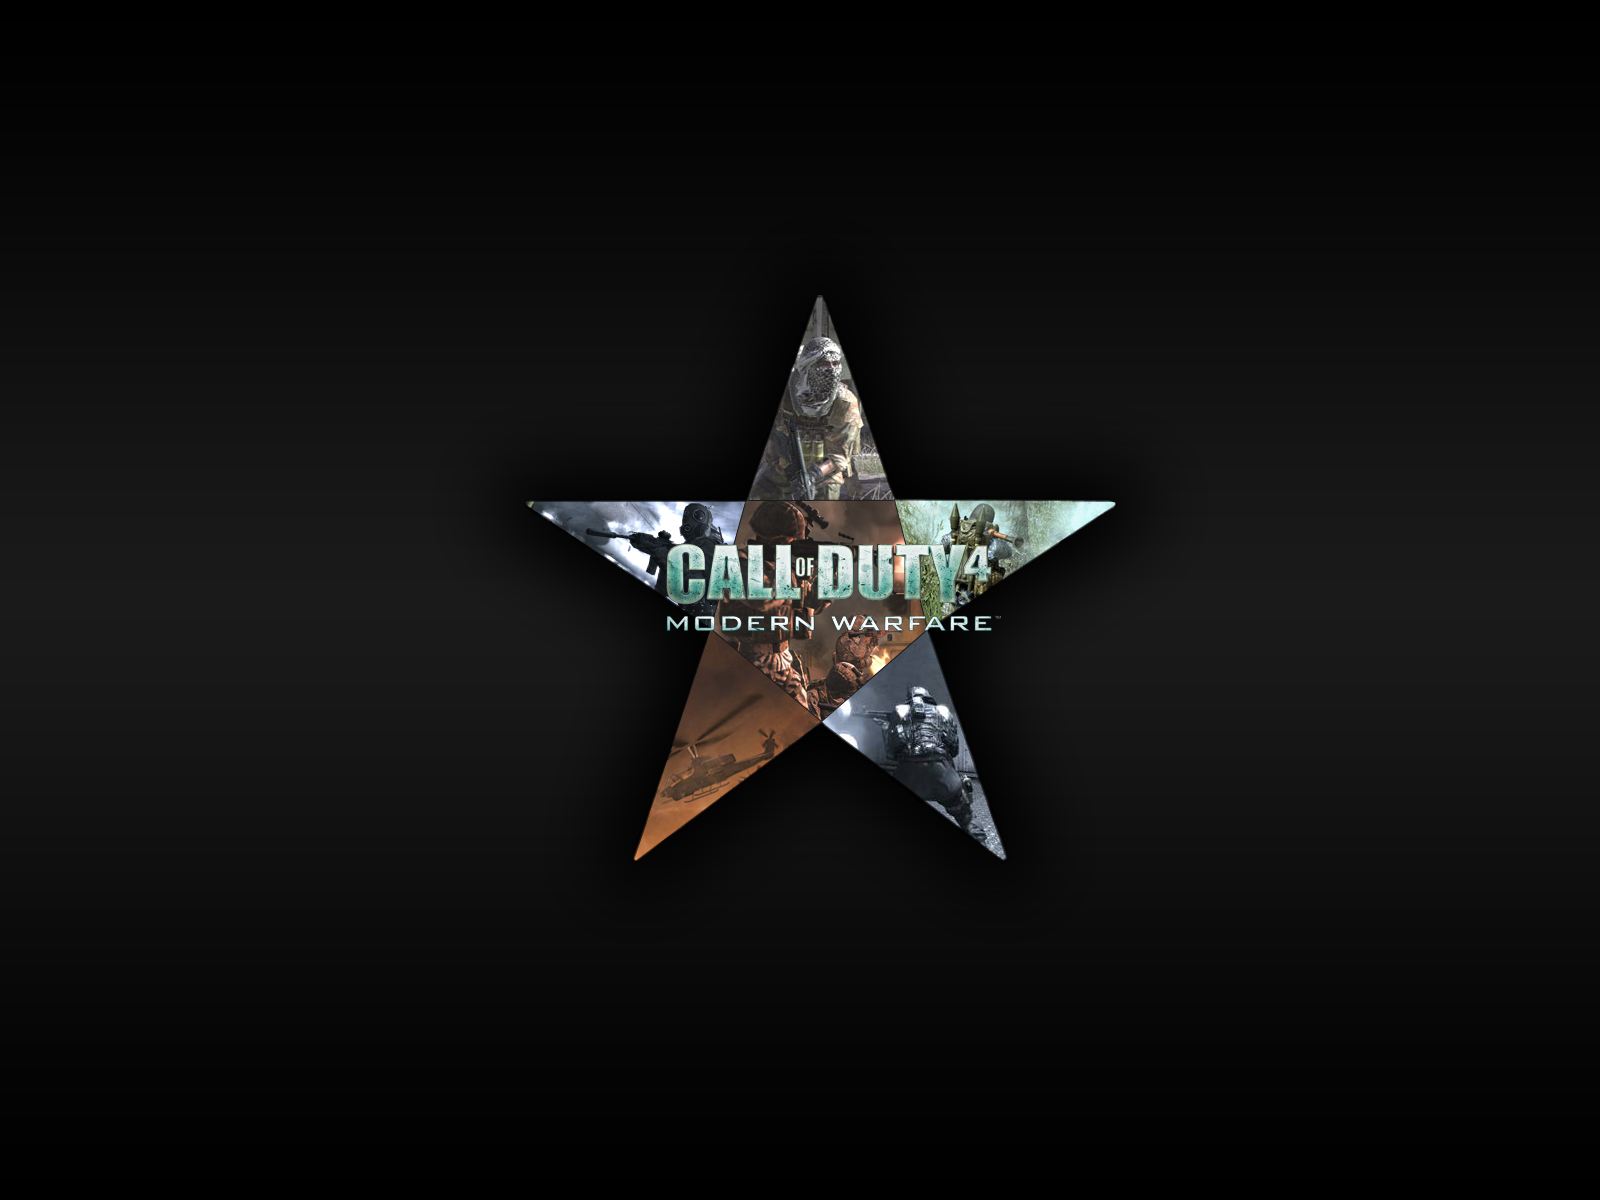 Call Of Duty 4 Wallpaper by SacrificialS on DeviantArt